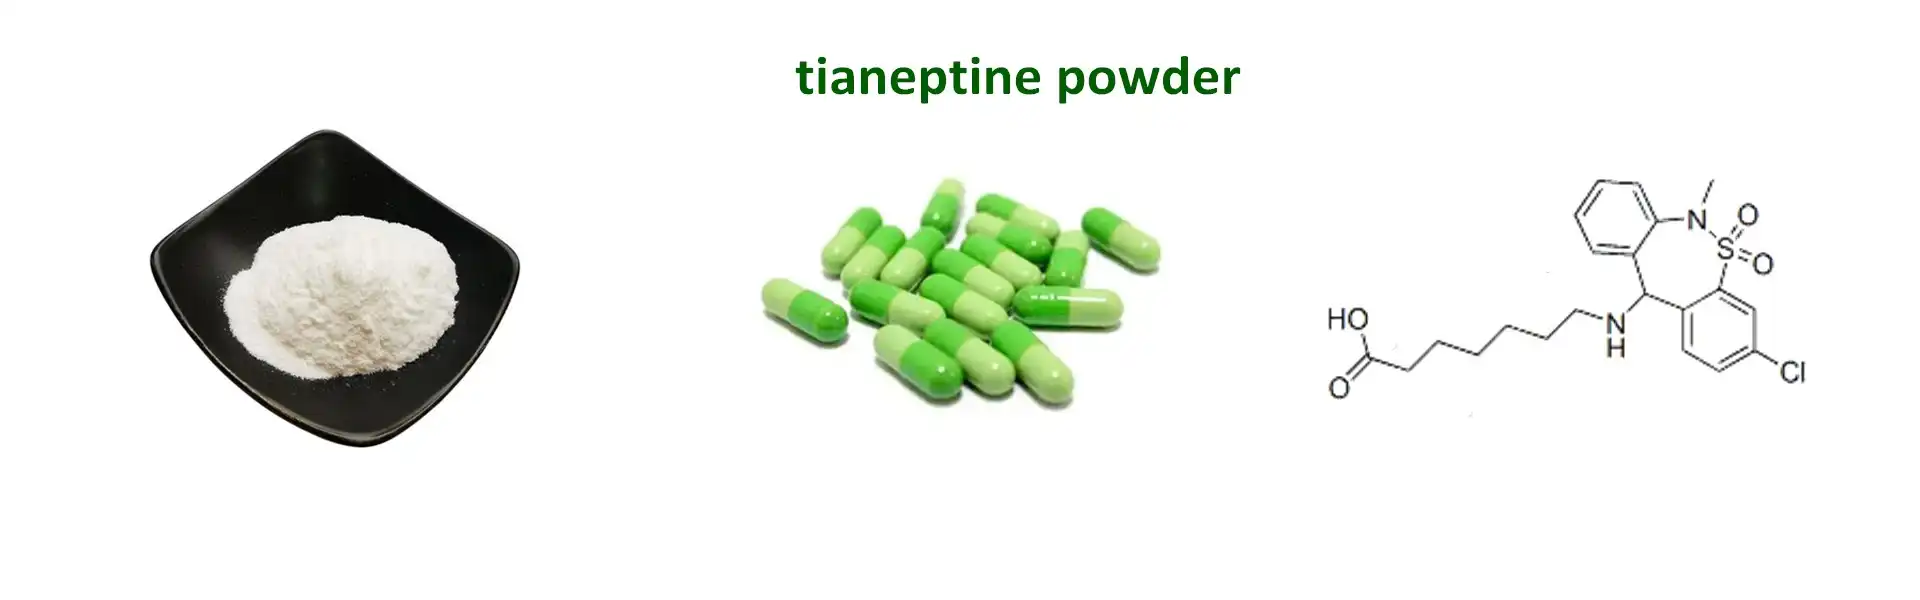 Tianeptine powder